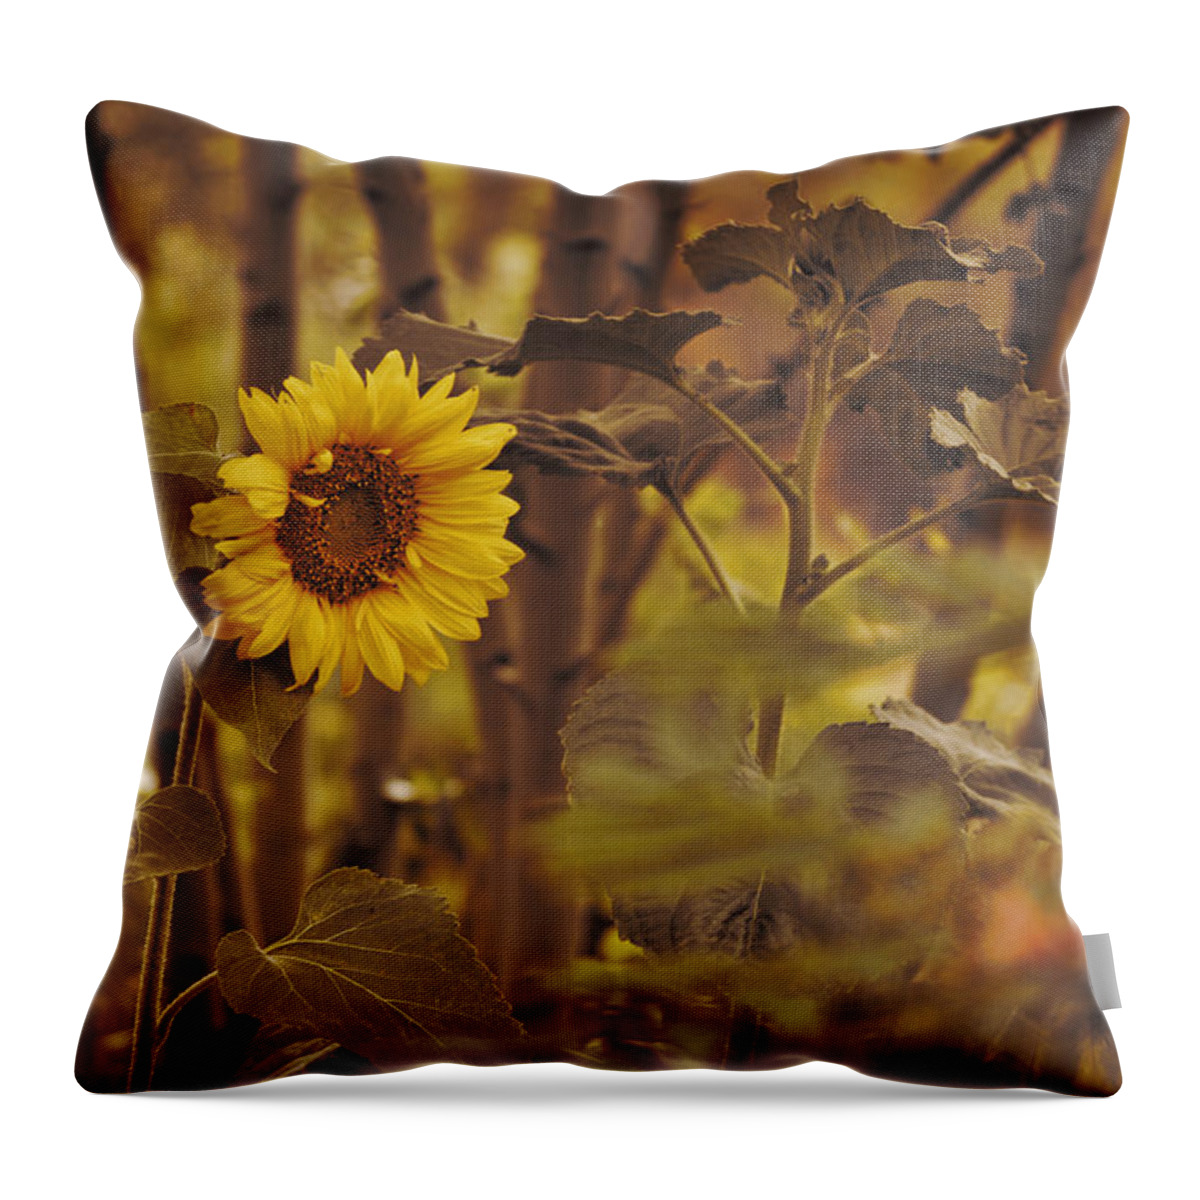 Sunflower Throw Pillow featuring the photograph Sunflower Sentry by Douglas MooreZart